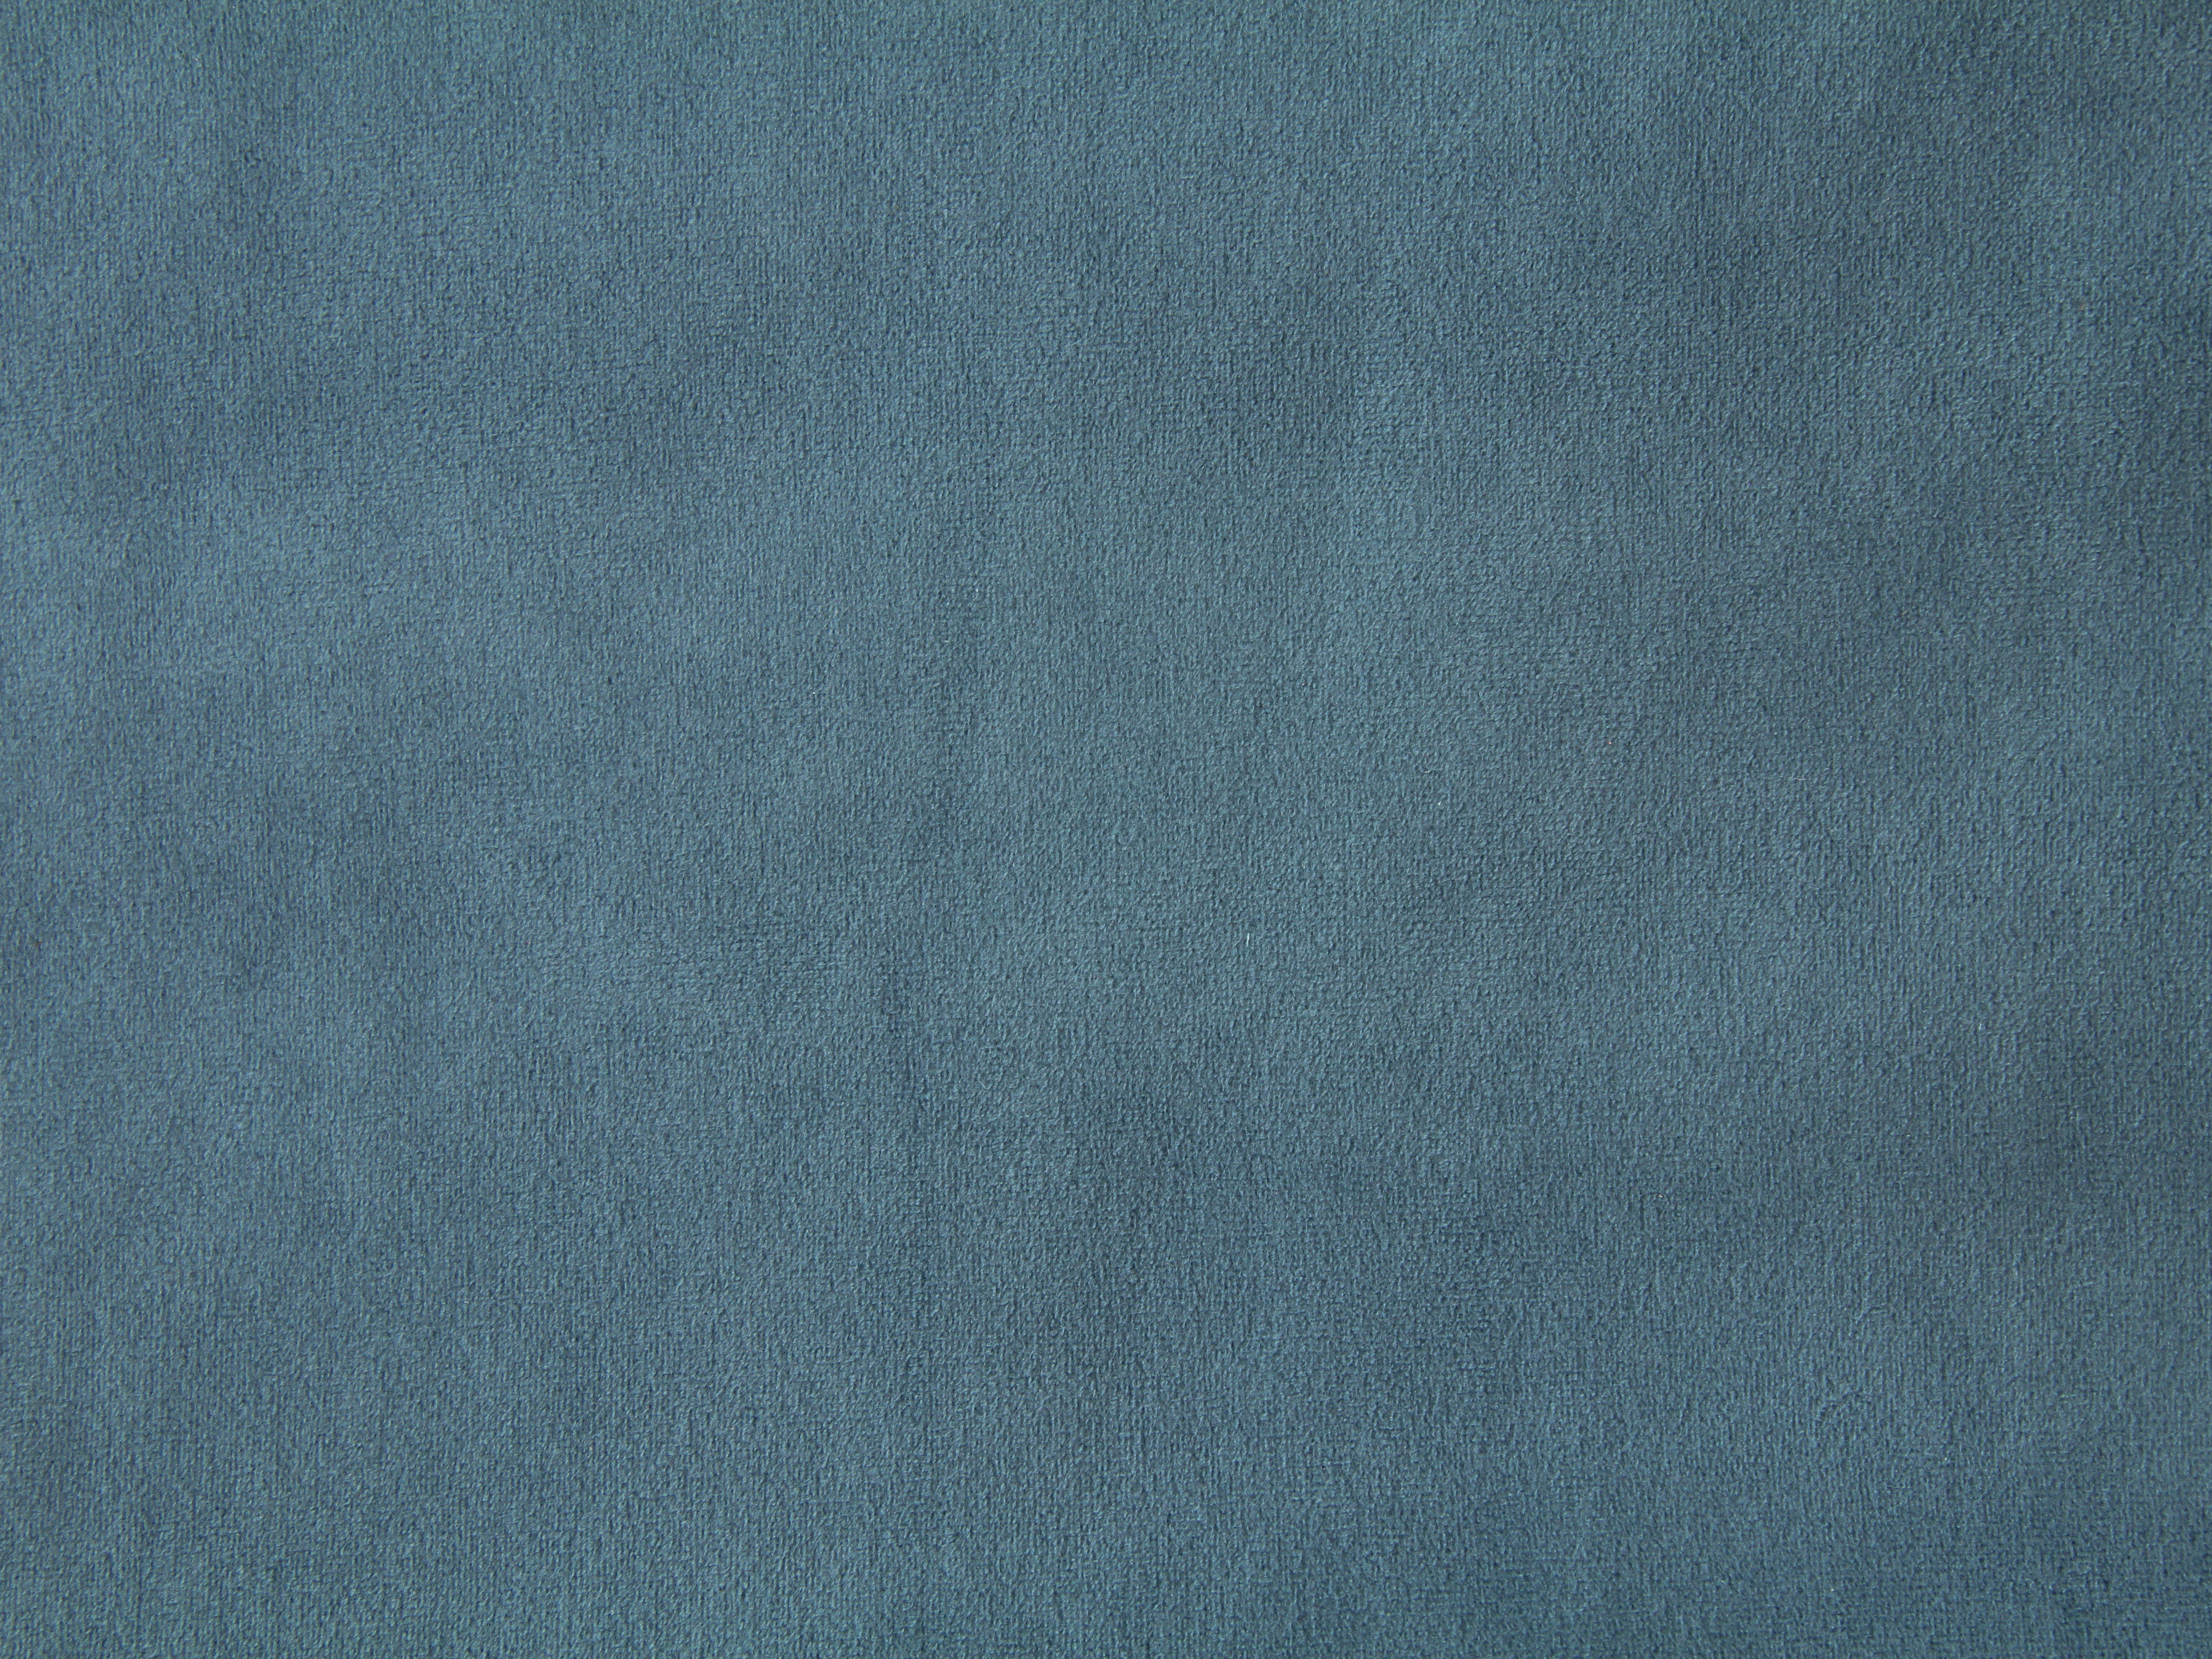 Blue Suede Texture Slate Fabric Cloth Soft Fuzz Wallpaper HD Wallpapers Download Free Images Wallpaper [wallpaper981.blogspot.com]